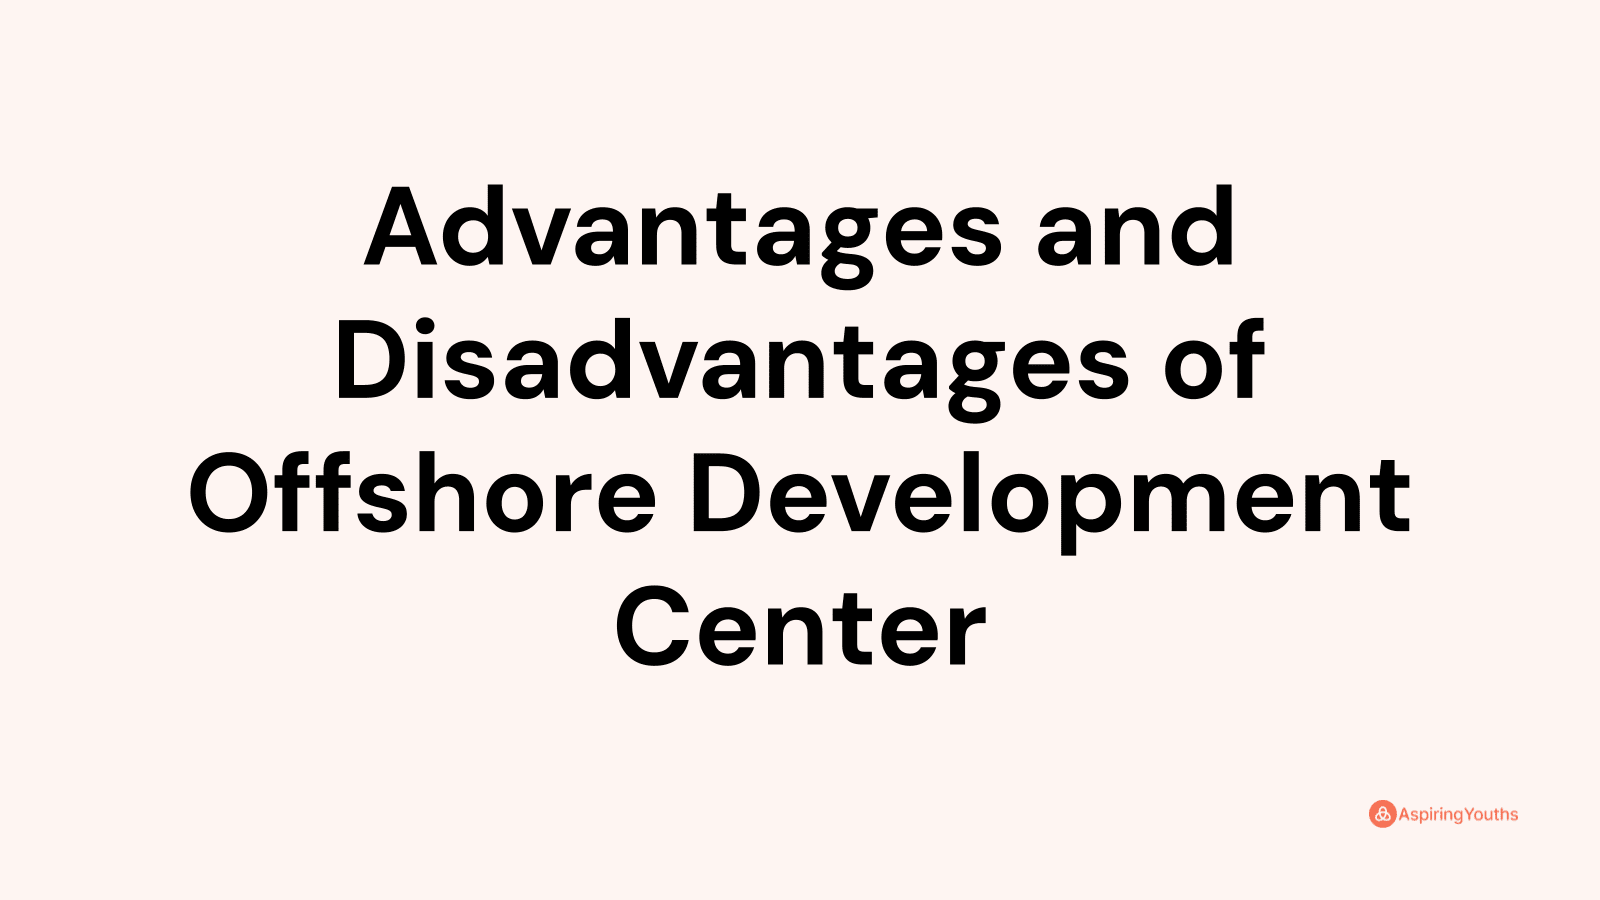 Advantages and disadvantages of Offshore Development Center